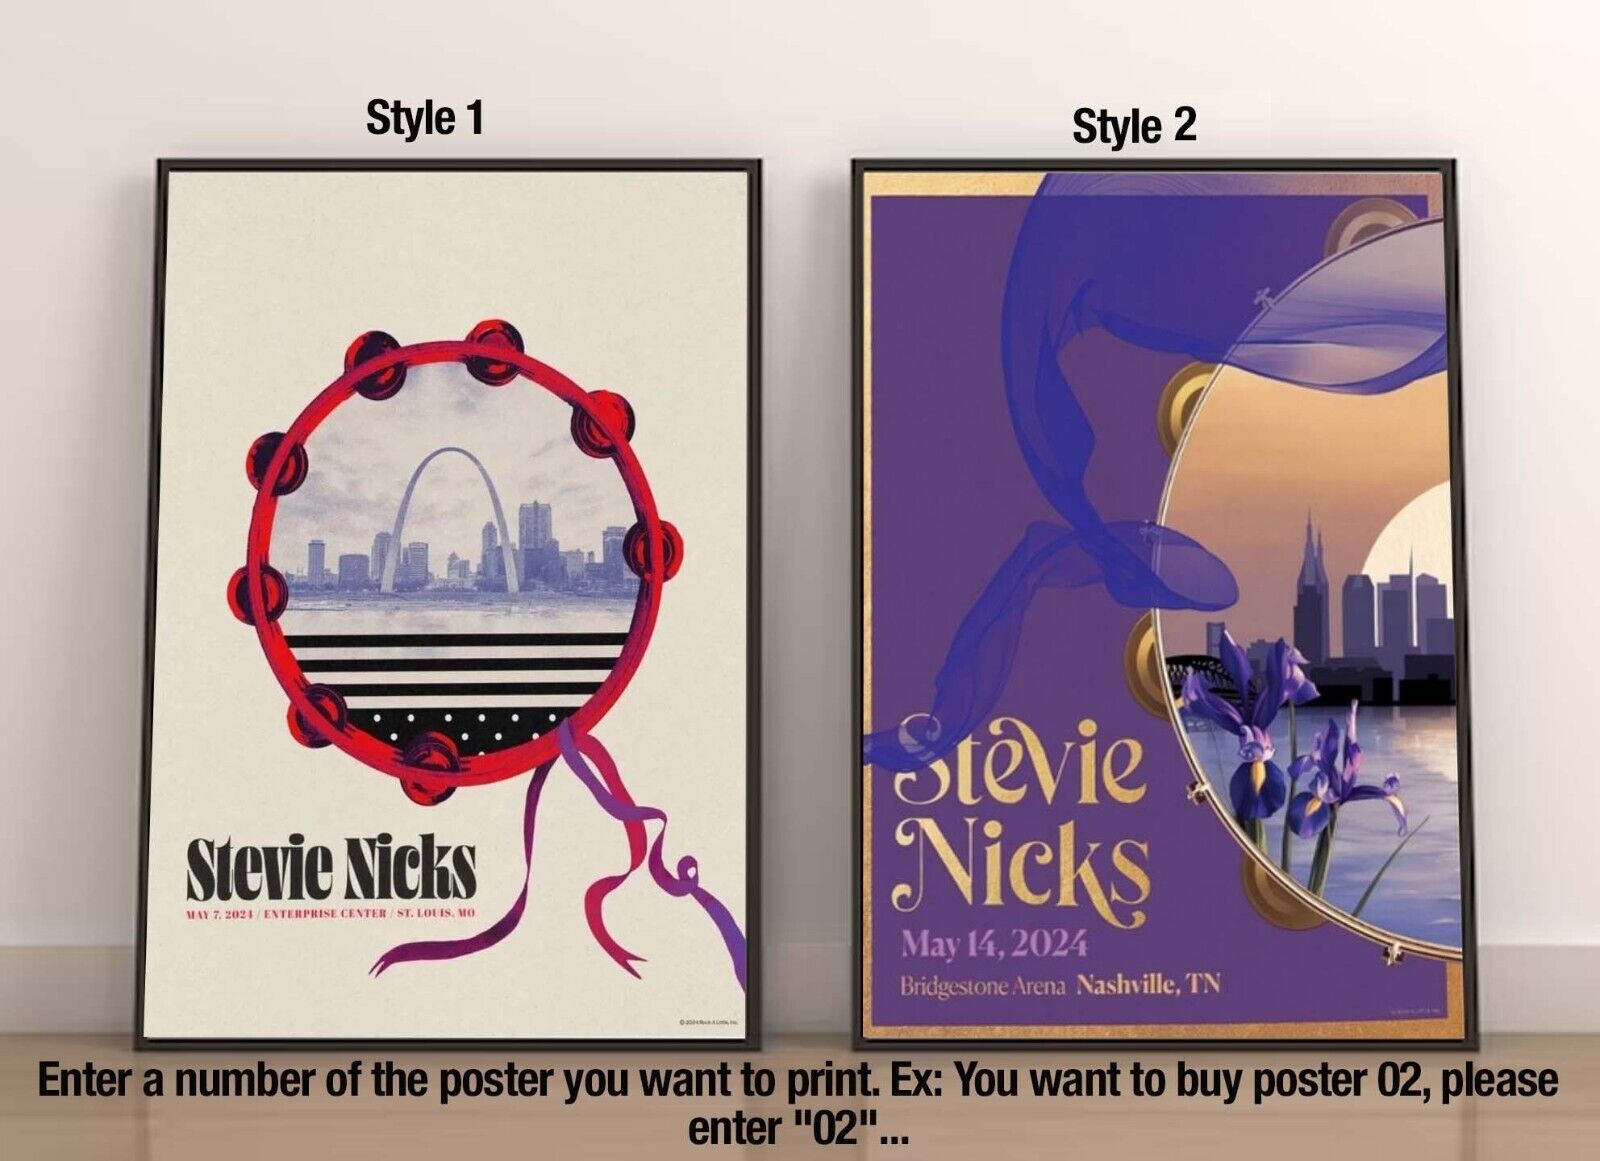 Stevie Nicks May 14 2024 Bridgestone Arena Nashville TN Poster, Stevie Nicks